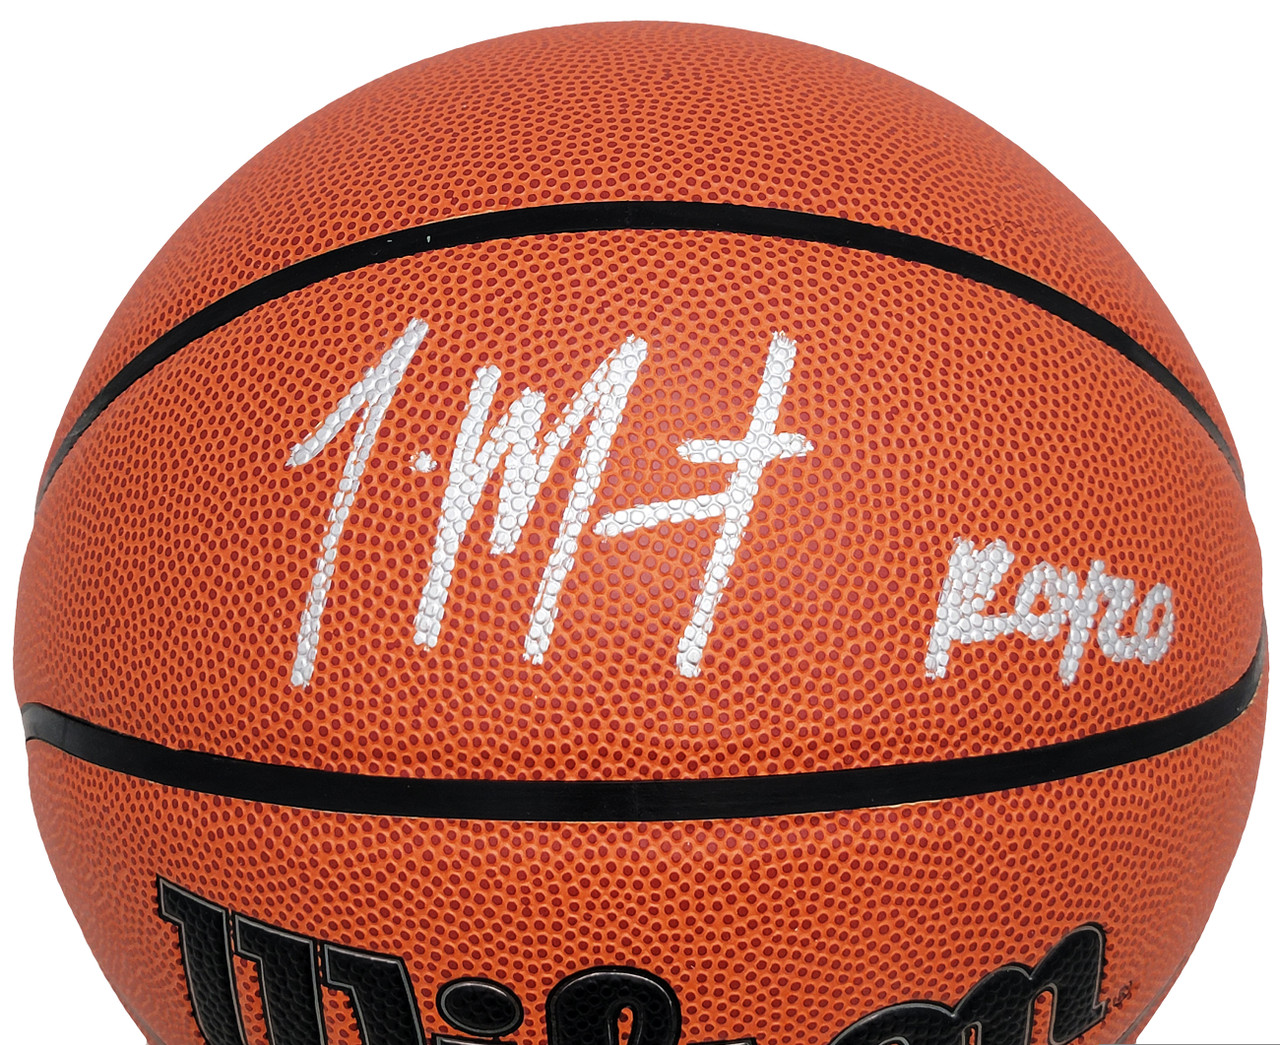 2003/04 Memphis Grizzlies autographed basketball